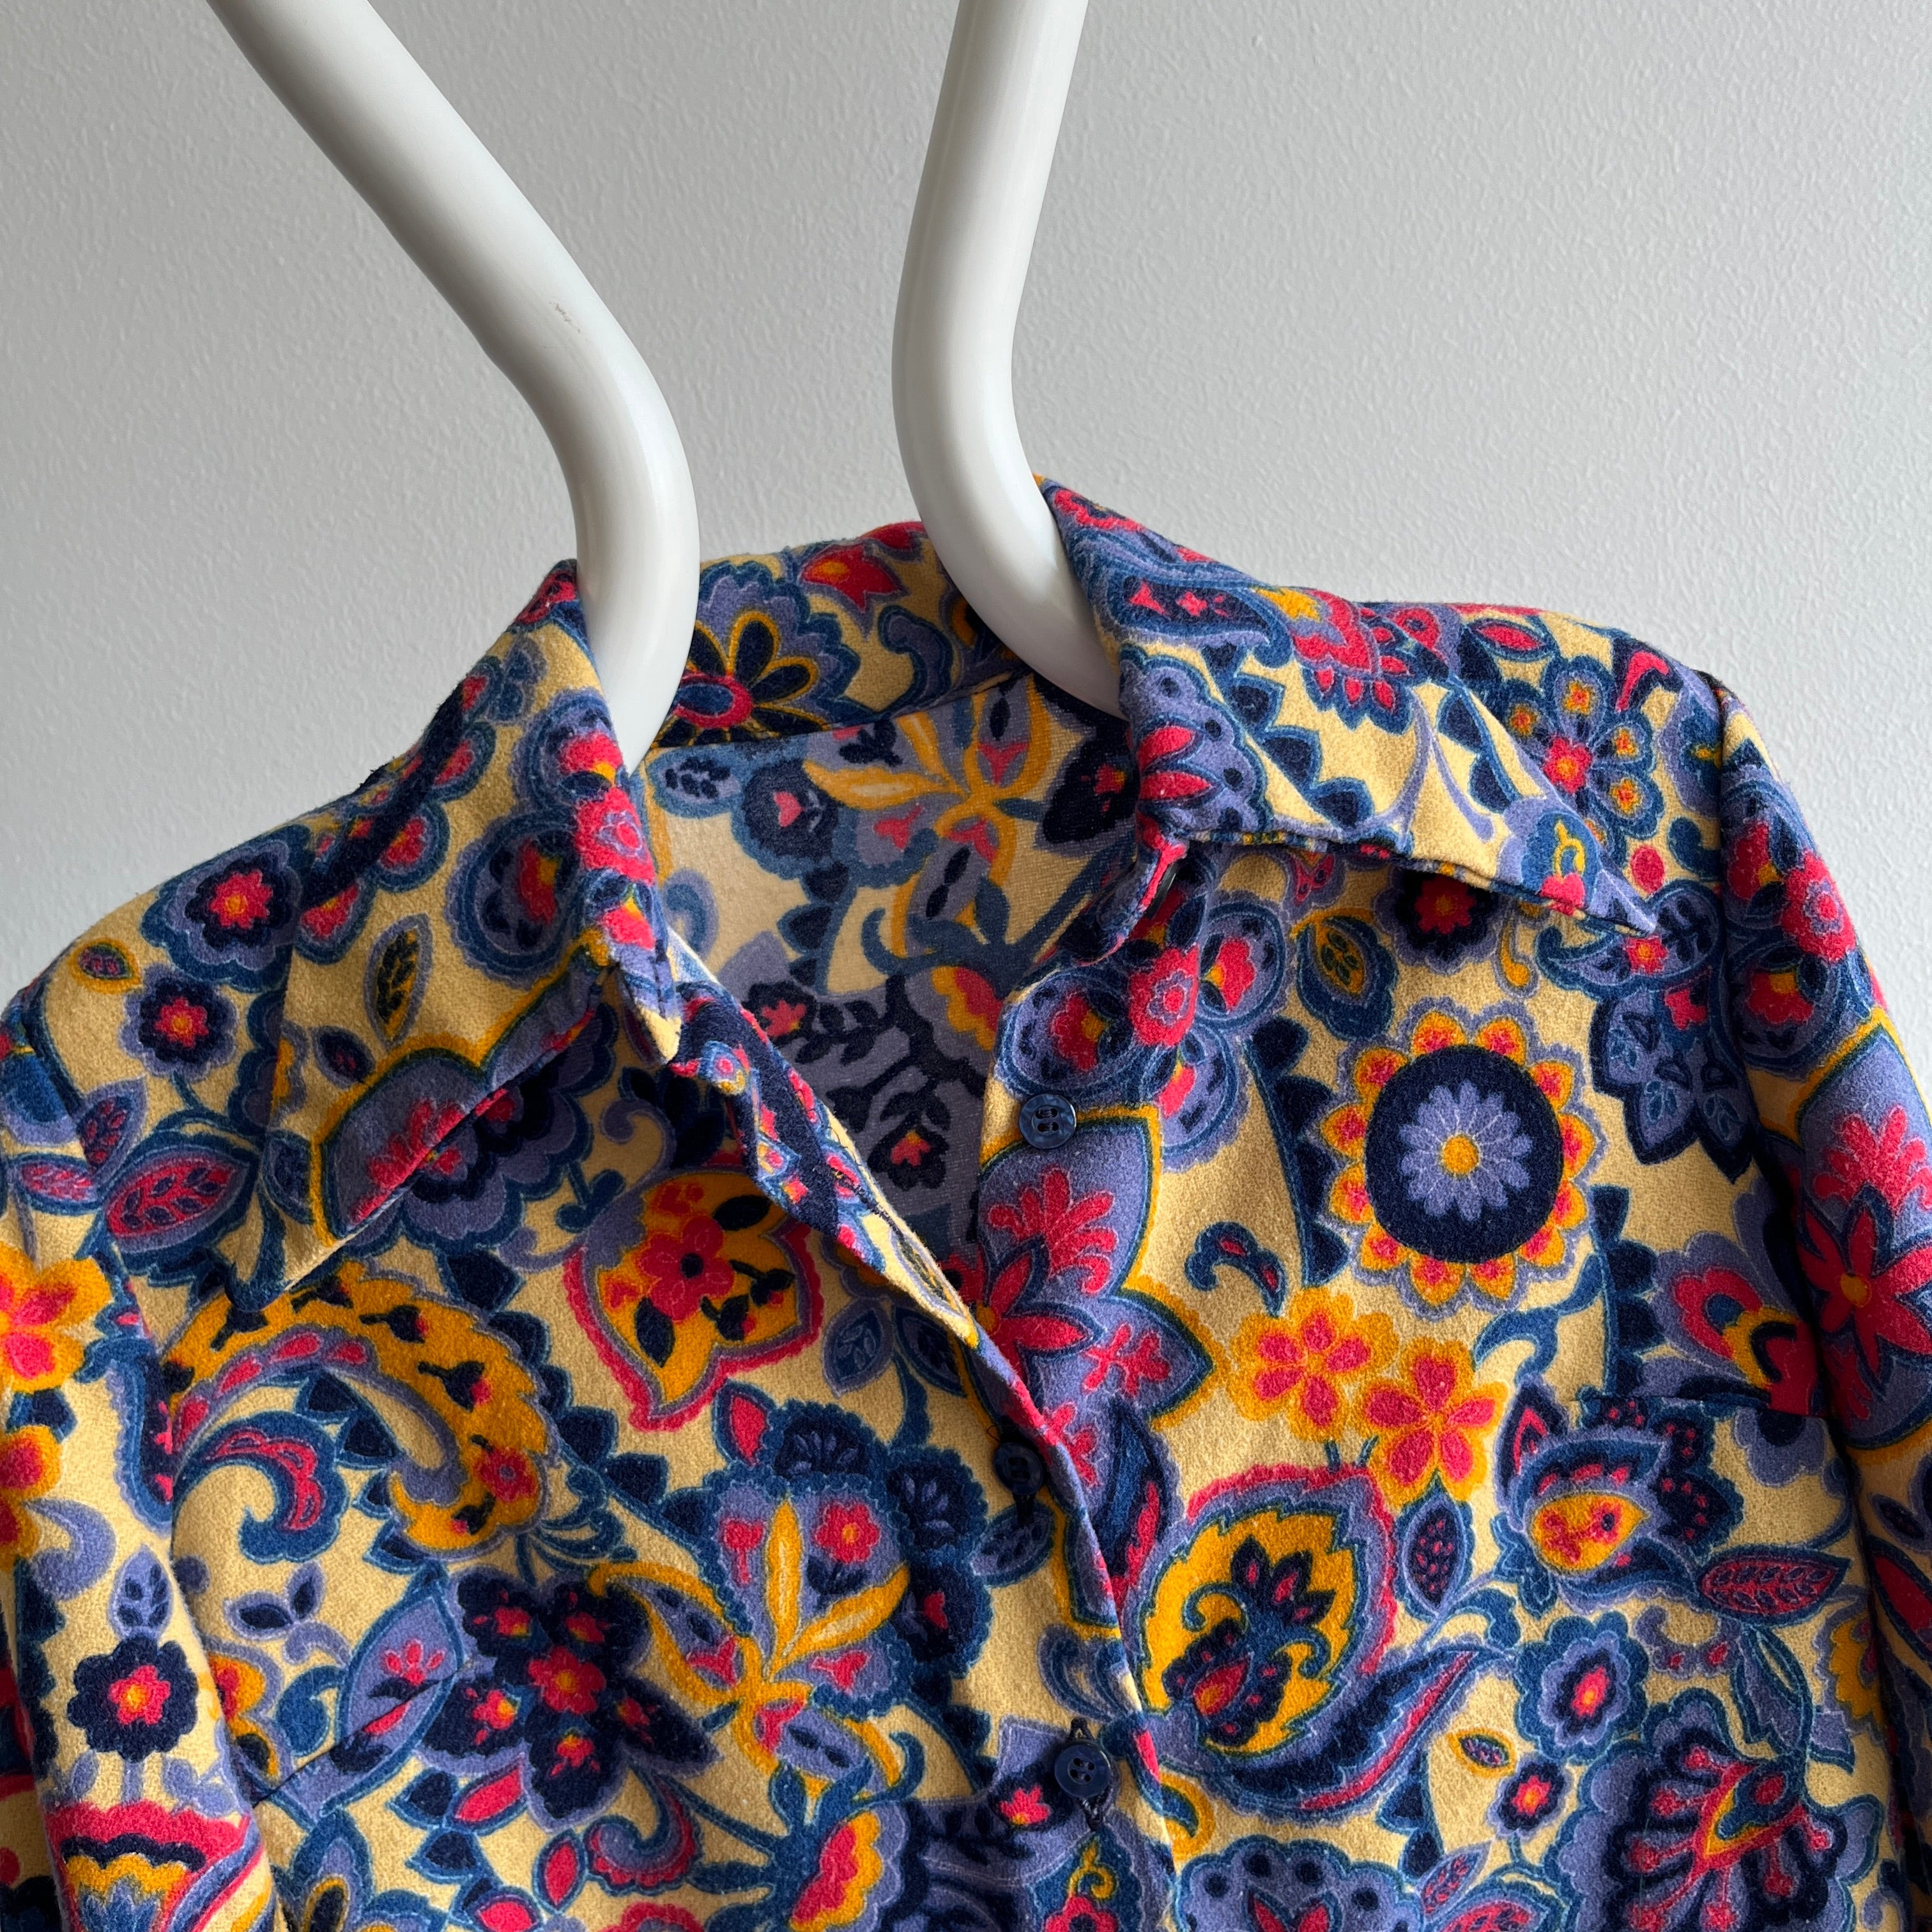 1970s Handmade Hippie Button Up Shirt with Super Collar Tips